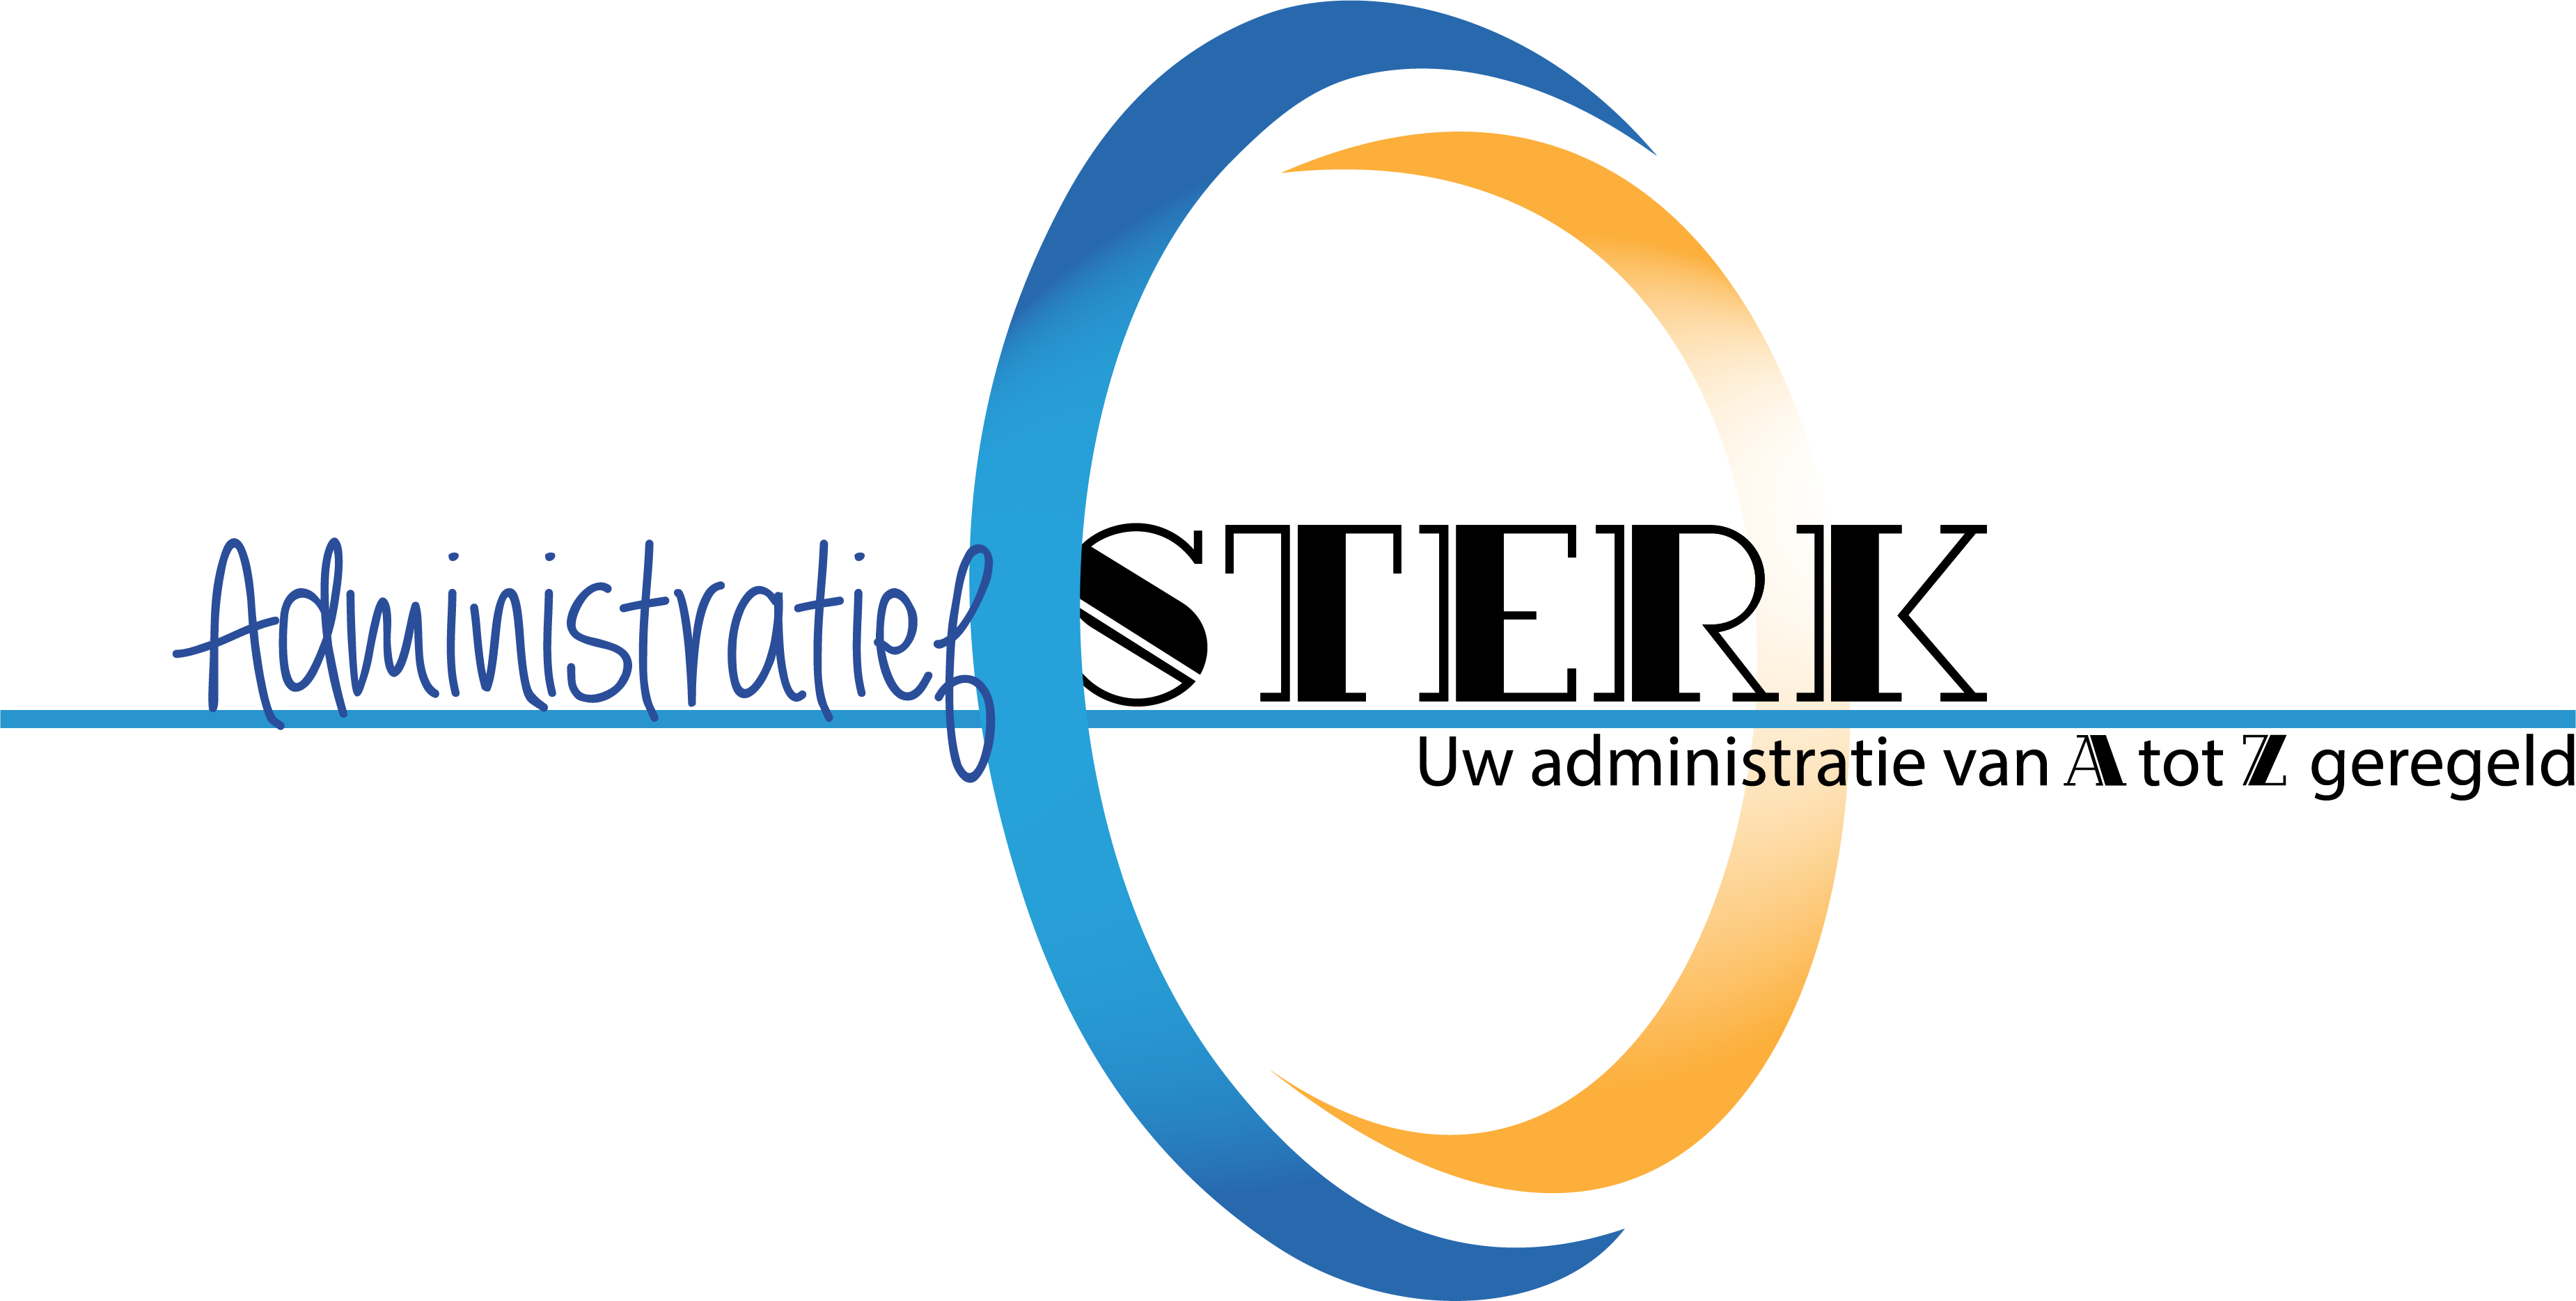 Administratief Sterk logo